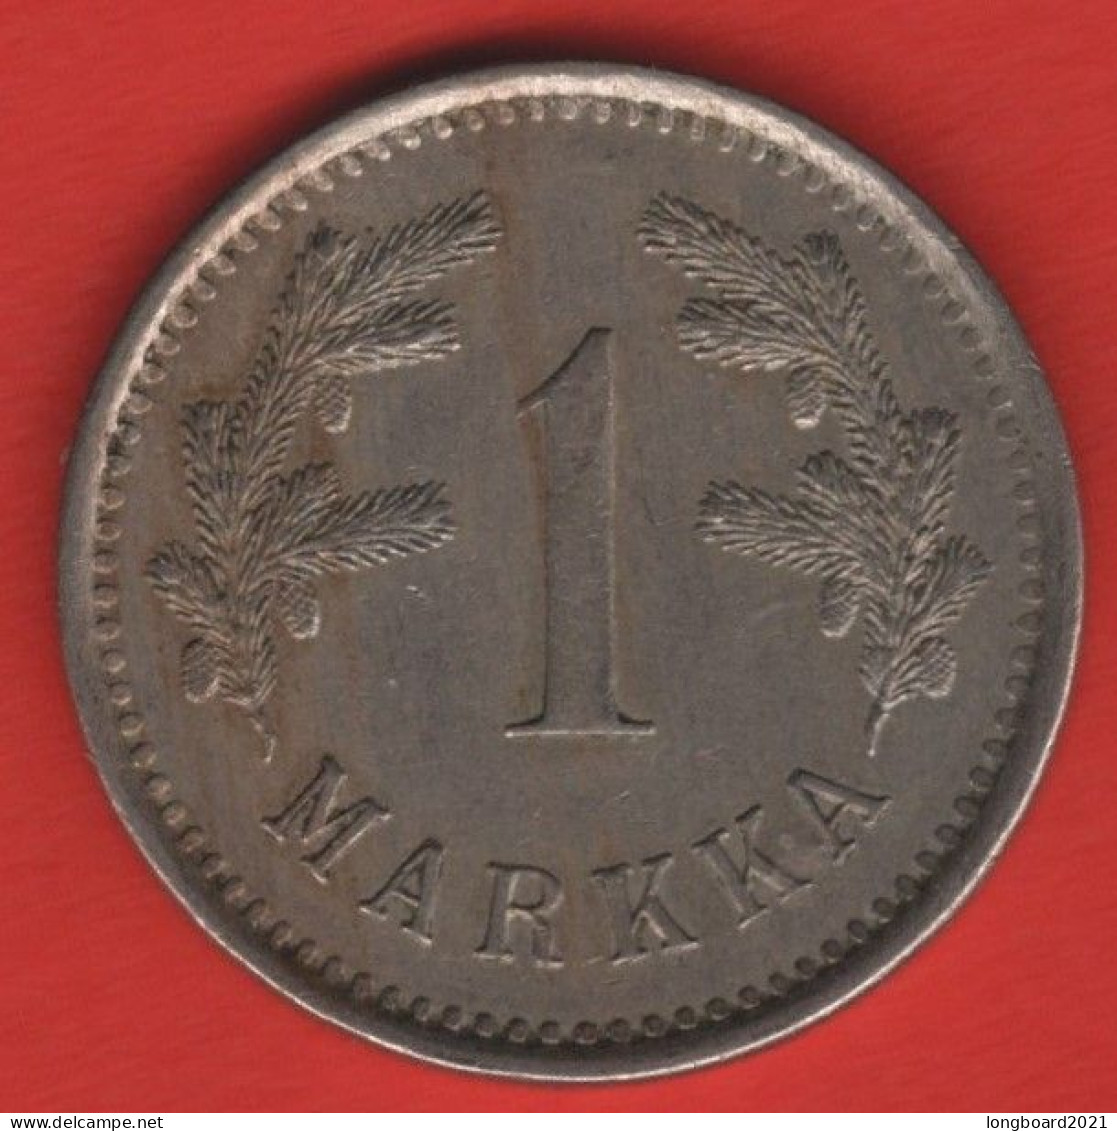 FINLAND - 1 MARKKA 1922 - Finlande